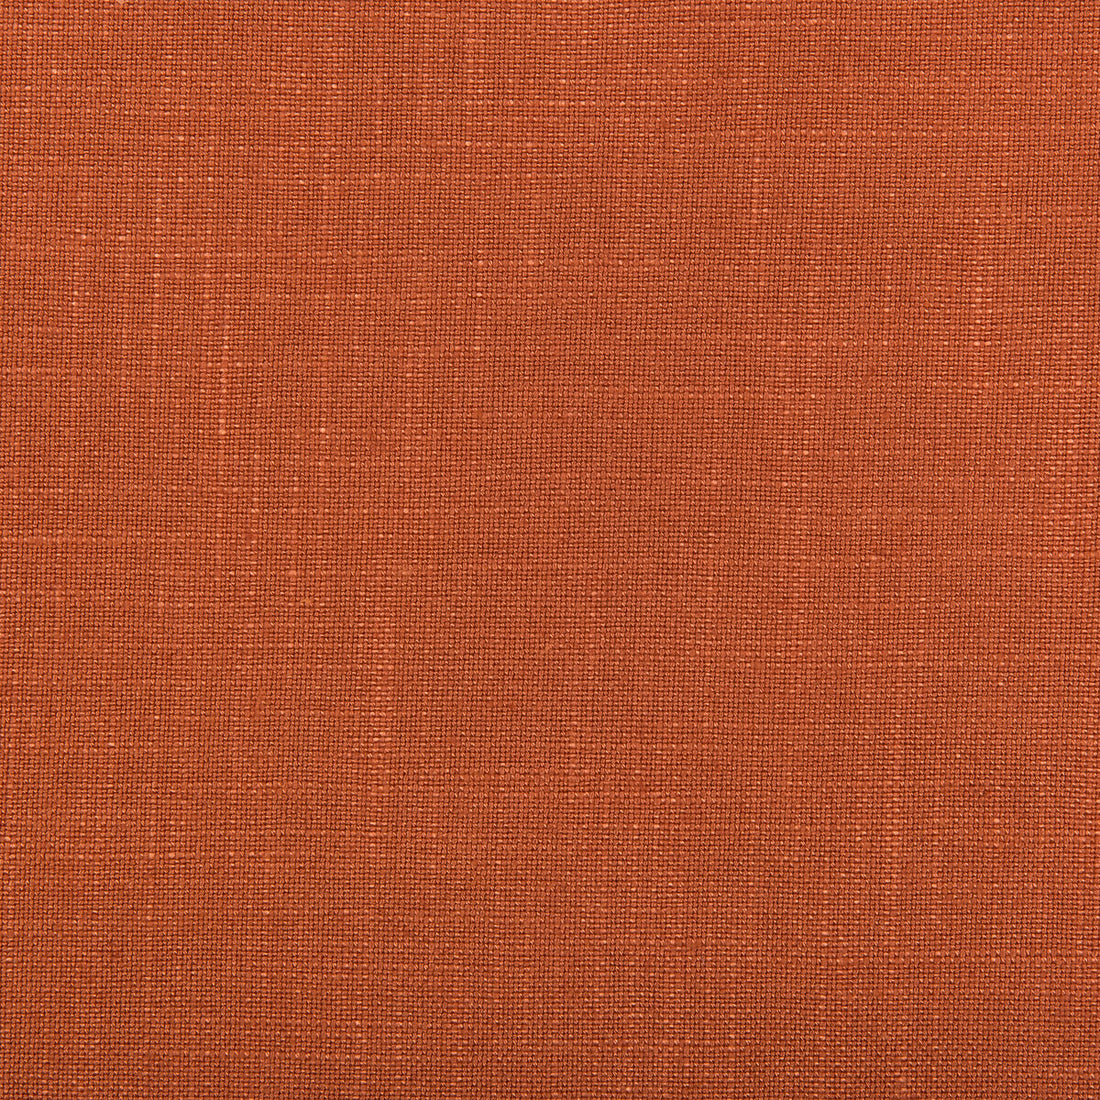 Aura fabric in mango color - pattern 35520.24.0 - by Kravet Design